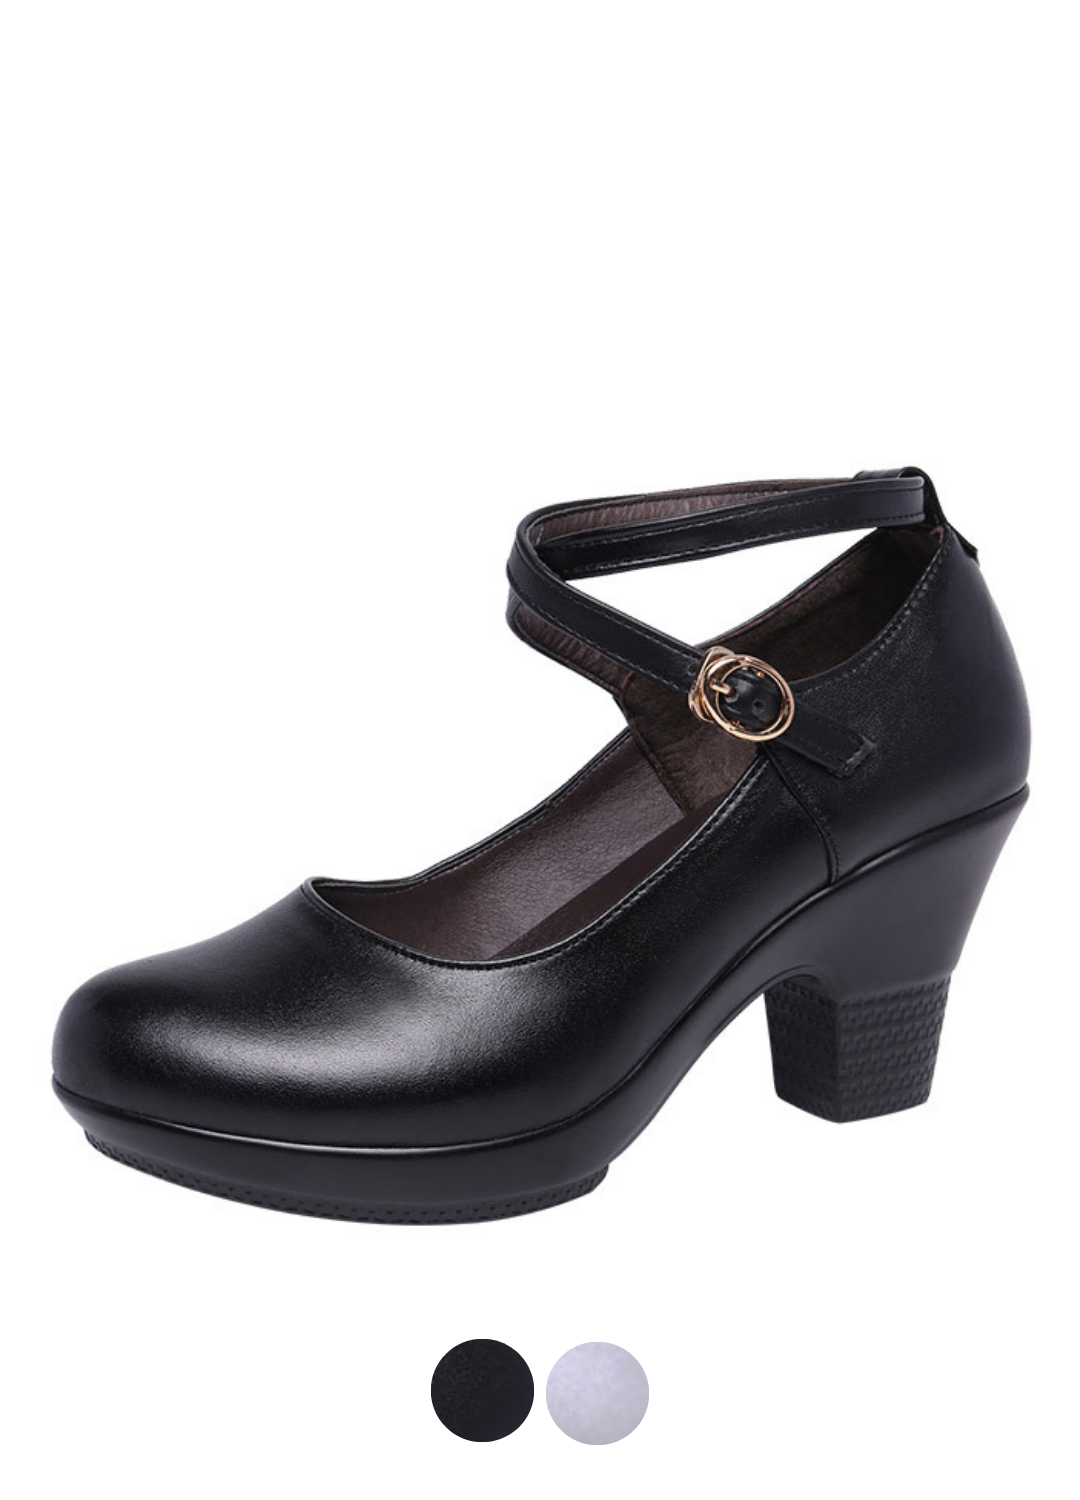 Tañon Women's High Heels Pump Shoes | Ultrasellershoes.com – USS® Shoes